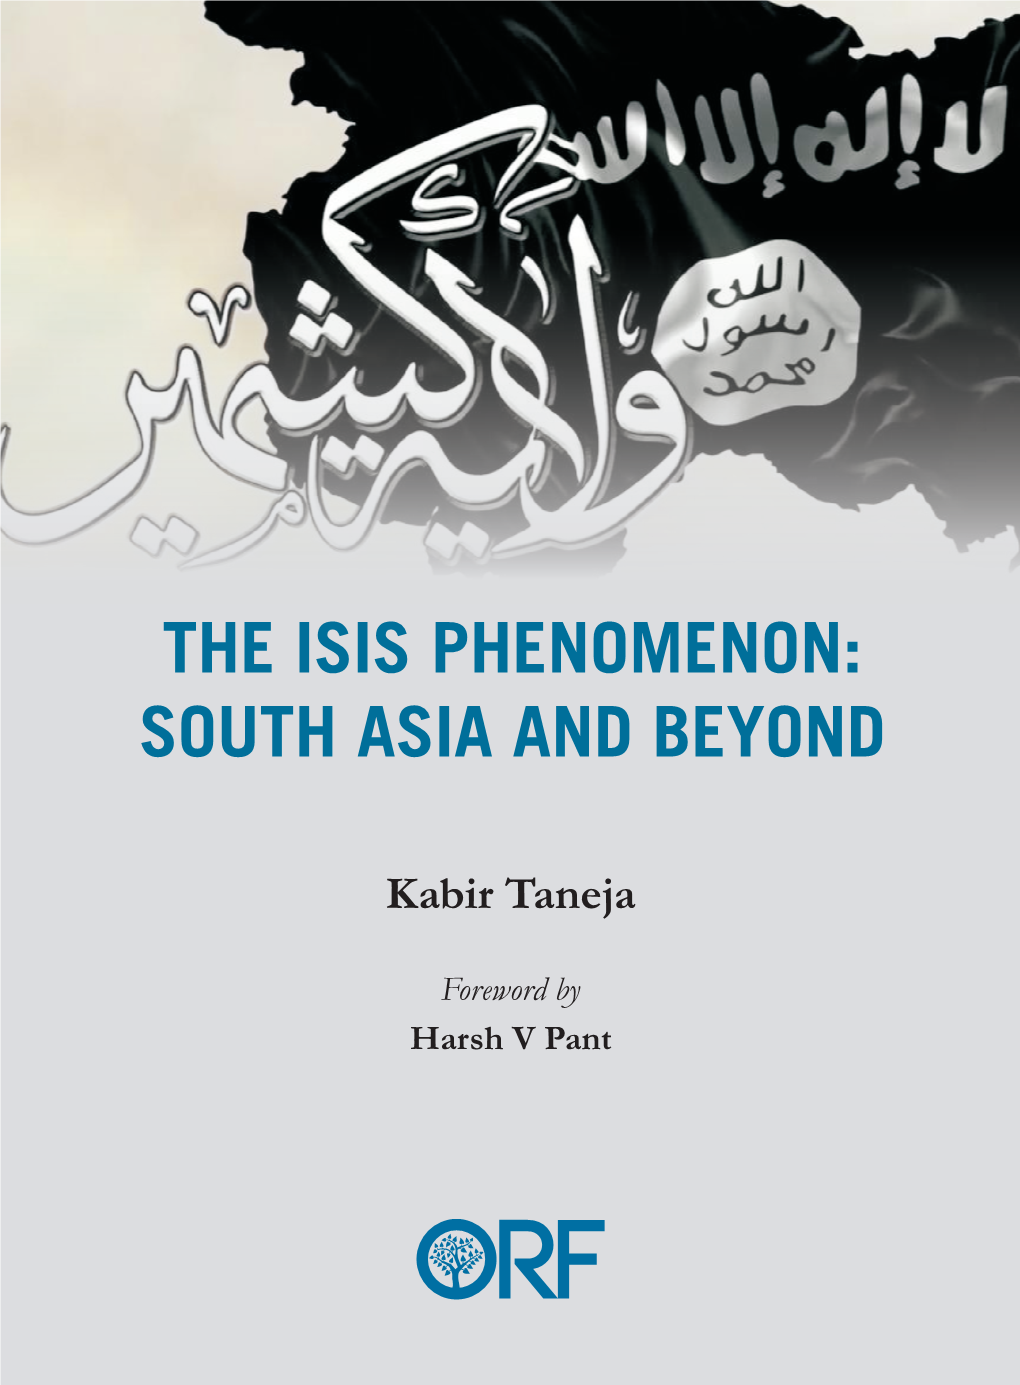 The Isis Phenomenon: South Asia and Beyond